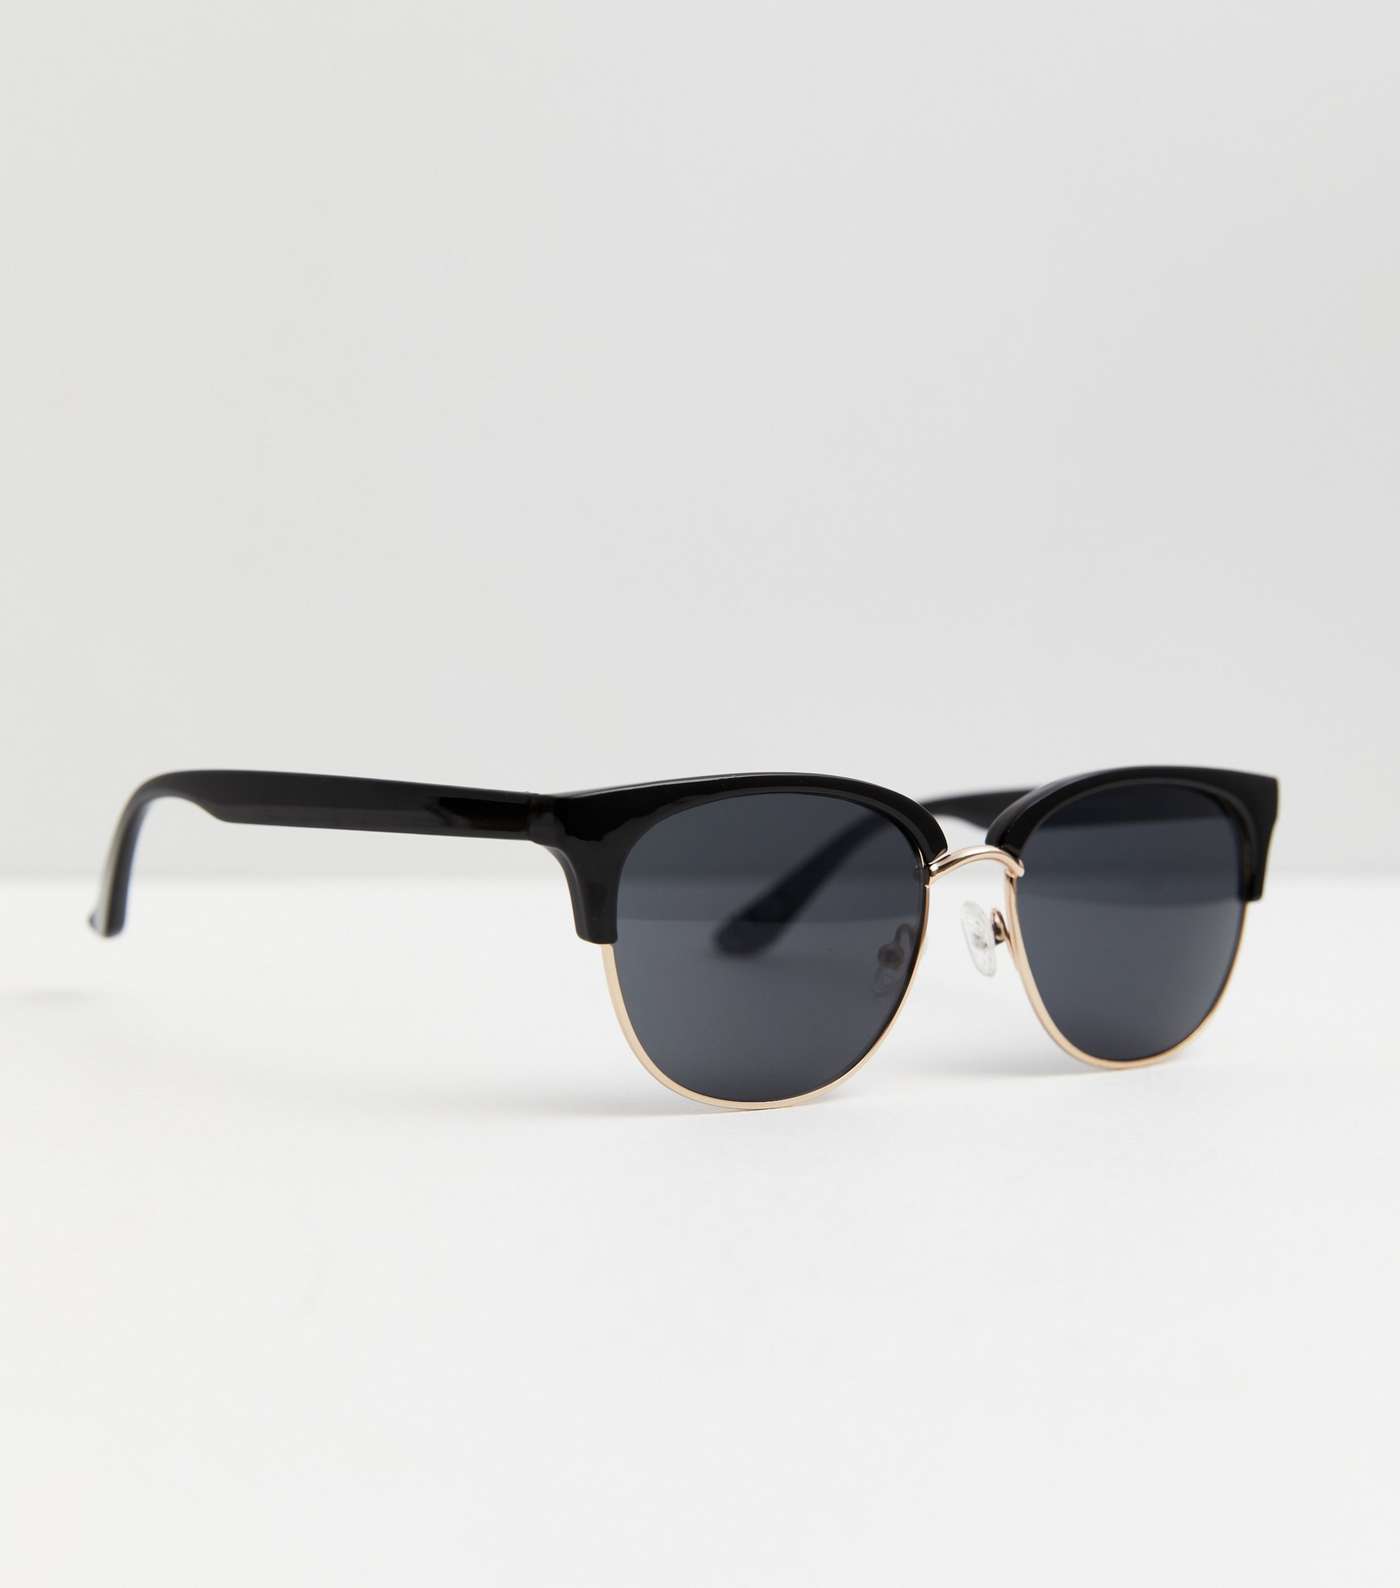 2 Pack Black and Tortoiseshell Effect Square Sunglasses Image 3